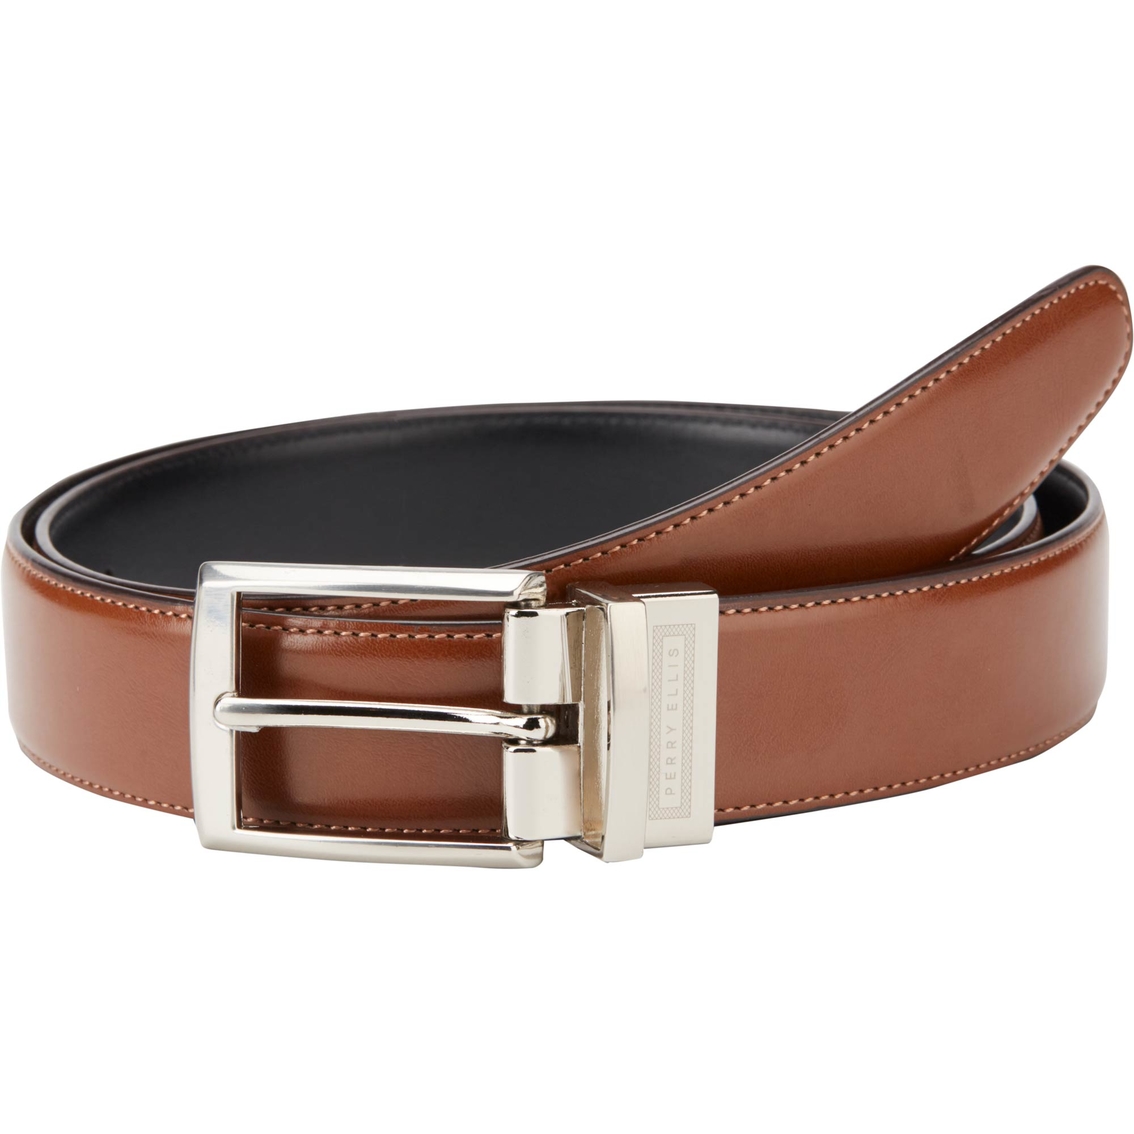 Perry Ellis Reversible Amigo Tan Leather Belt - Image 3 of 4